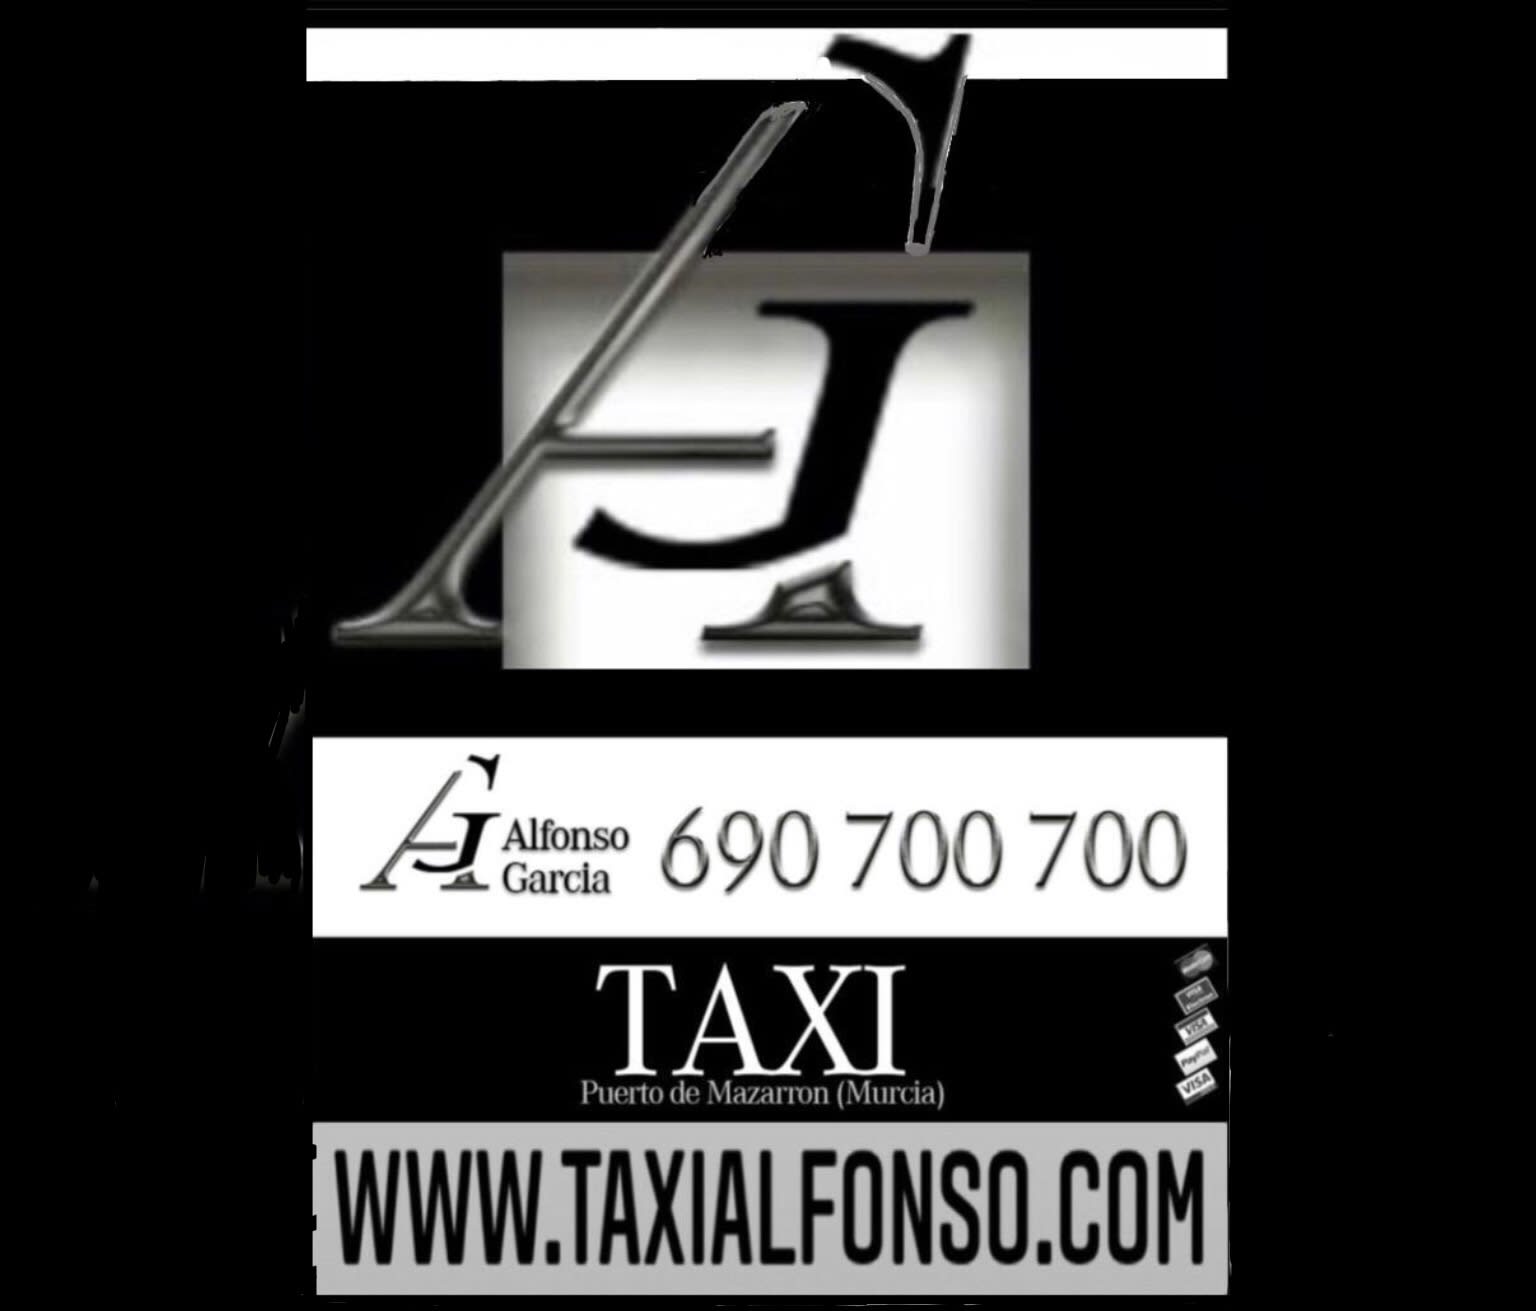 Taxi - Alfonso Garcia